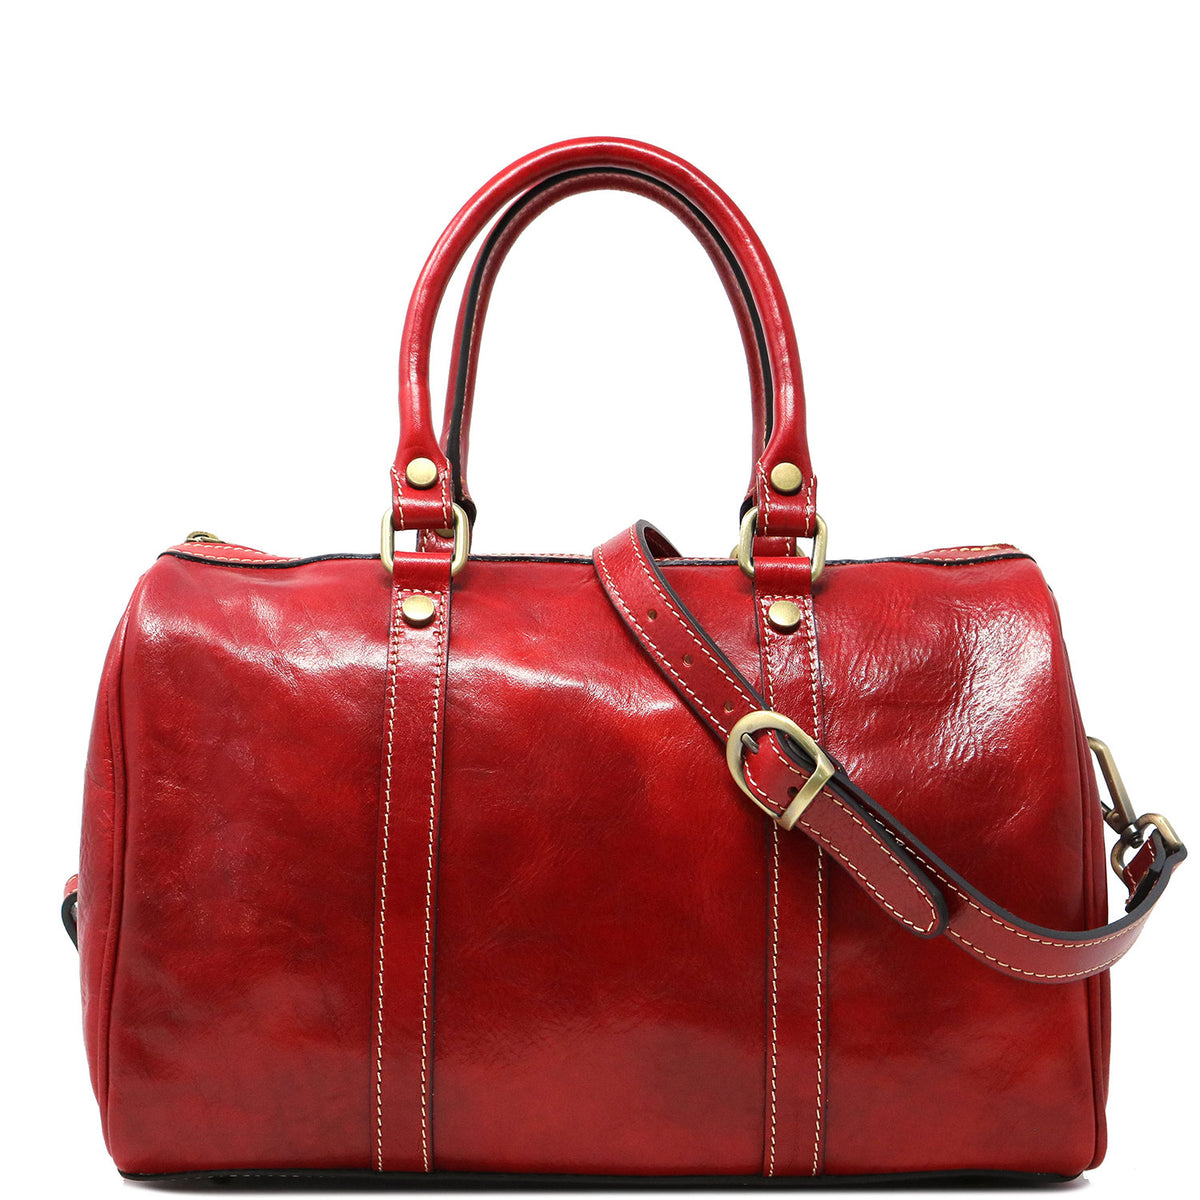 Floto Italian Leather Boston Bag Handbag Shoulder Bag Women's Bag